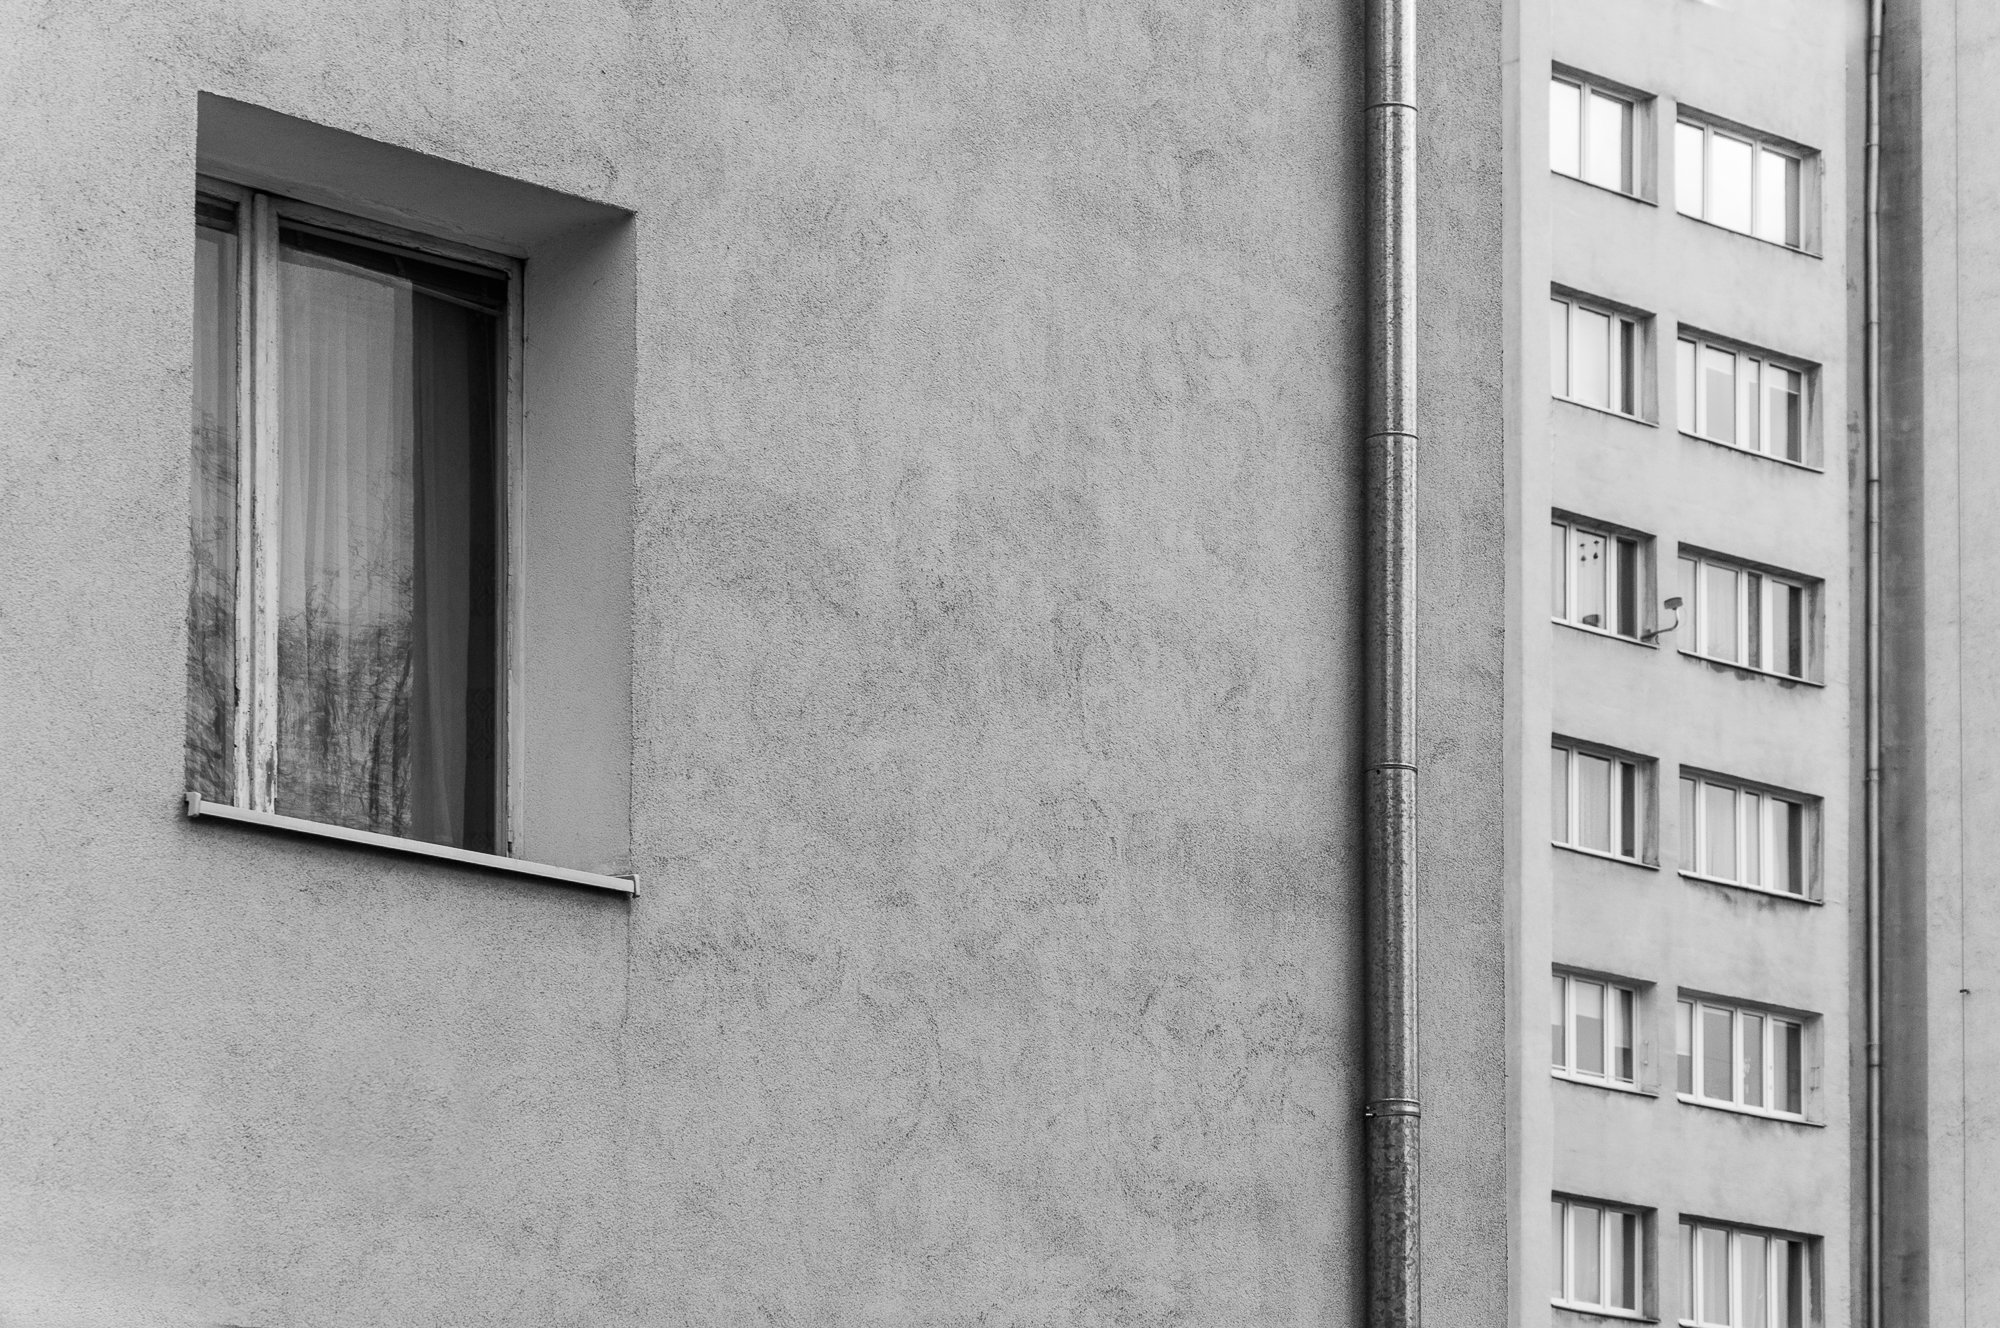 Adam Mazek Photography Warsaw (Warszawa) 2017. Post: "Documentary photography" Perspective. Architecture.